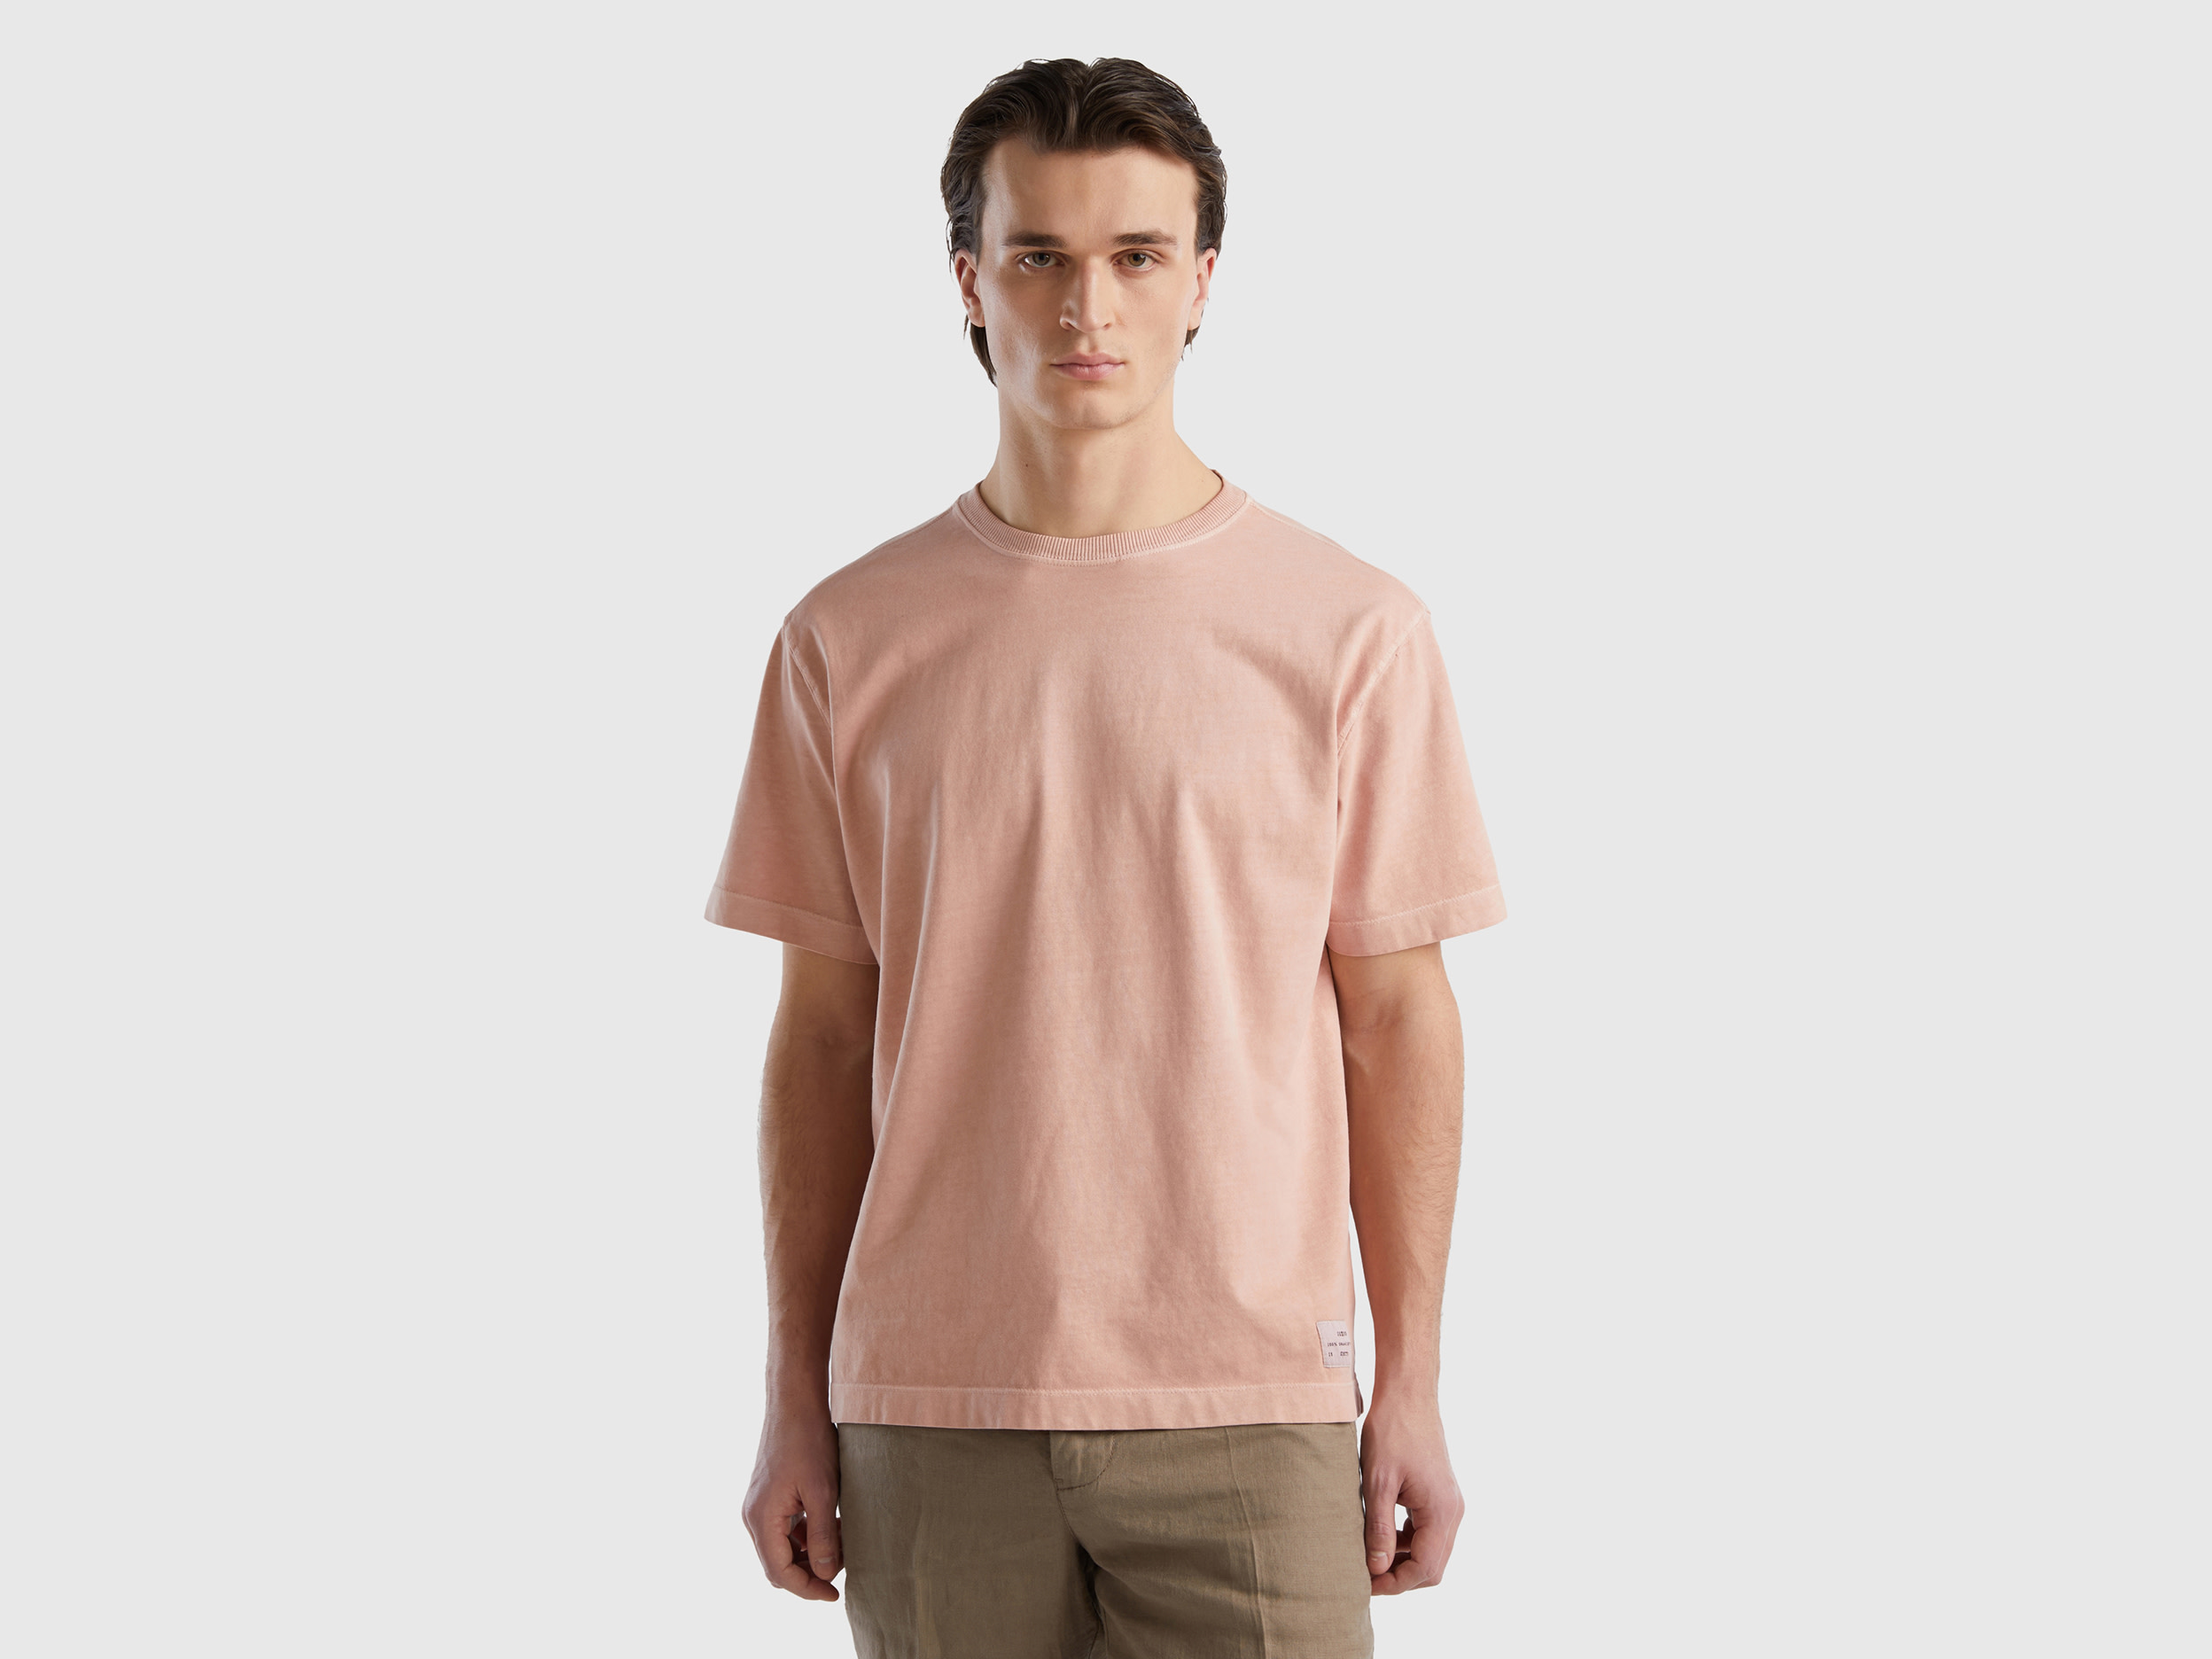 Image of Benetton, 100% Organic Cotton Crew Neck T-shirt, size M, Nude, Men